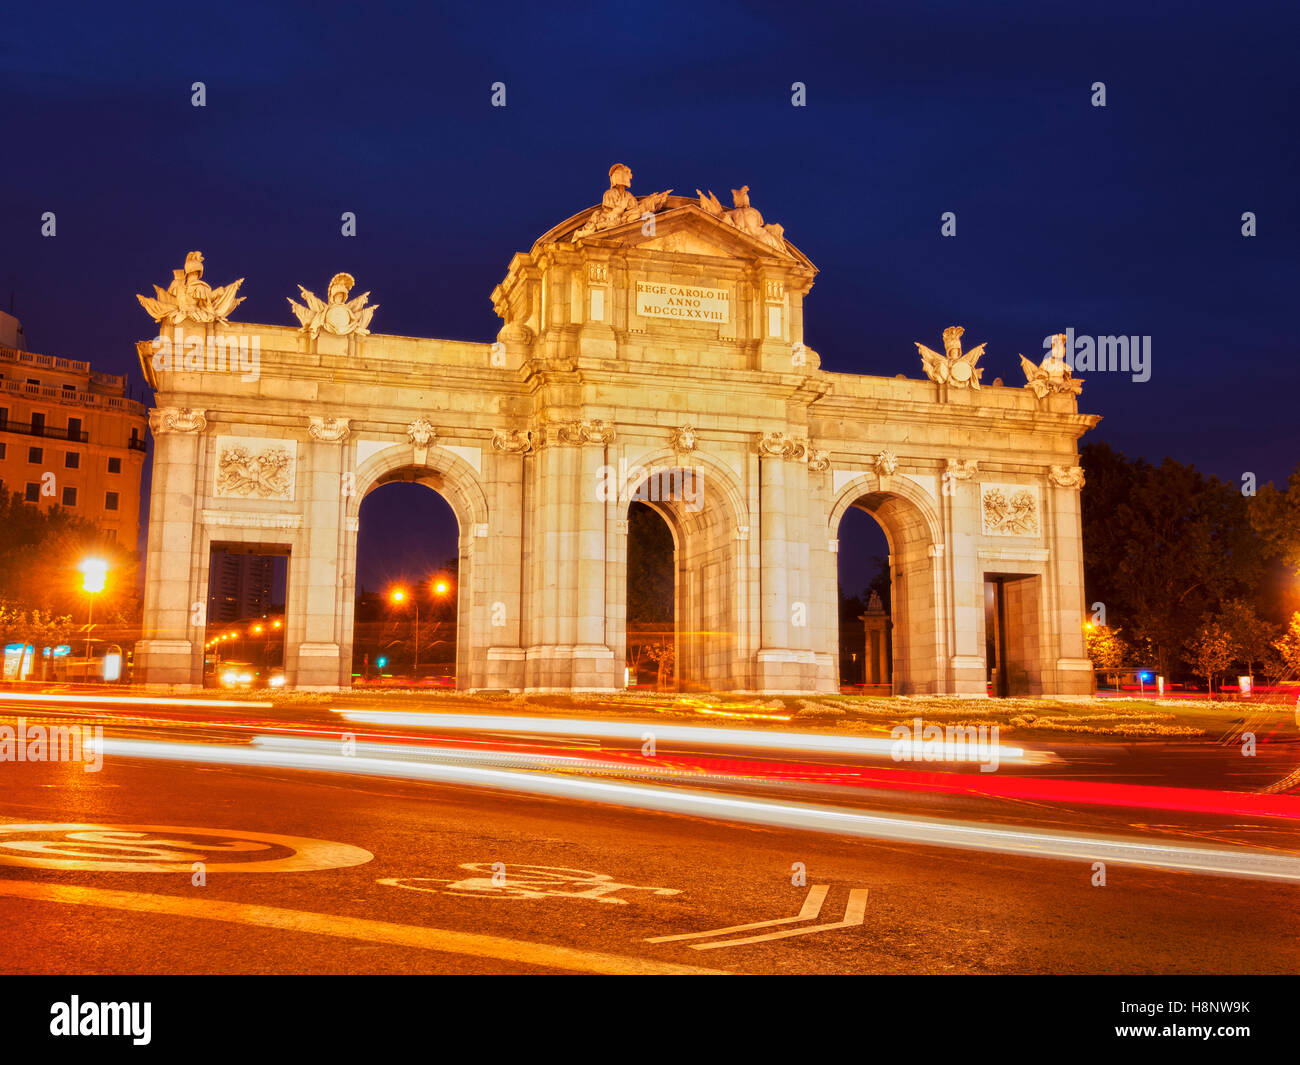 Spain, Madrid, Plaza de la Independencia, Neo-classical triumphal Archway The Puerta de Alcala. Stock Photo